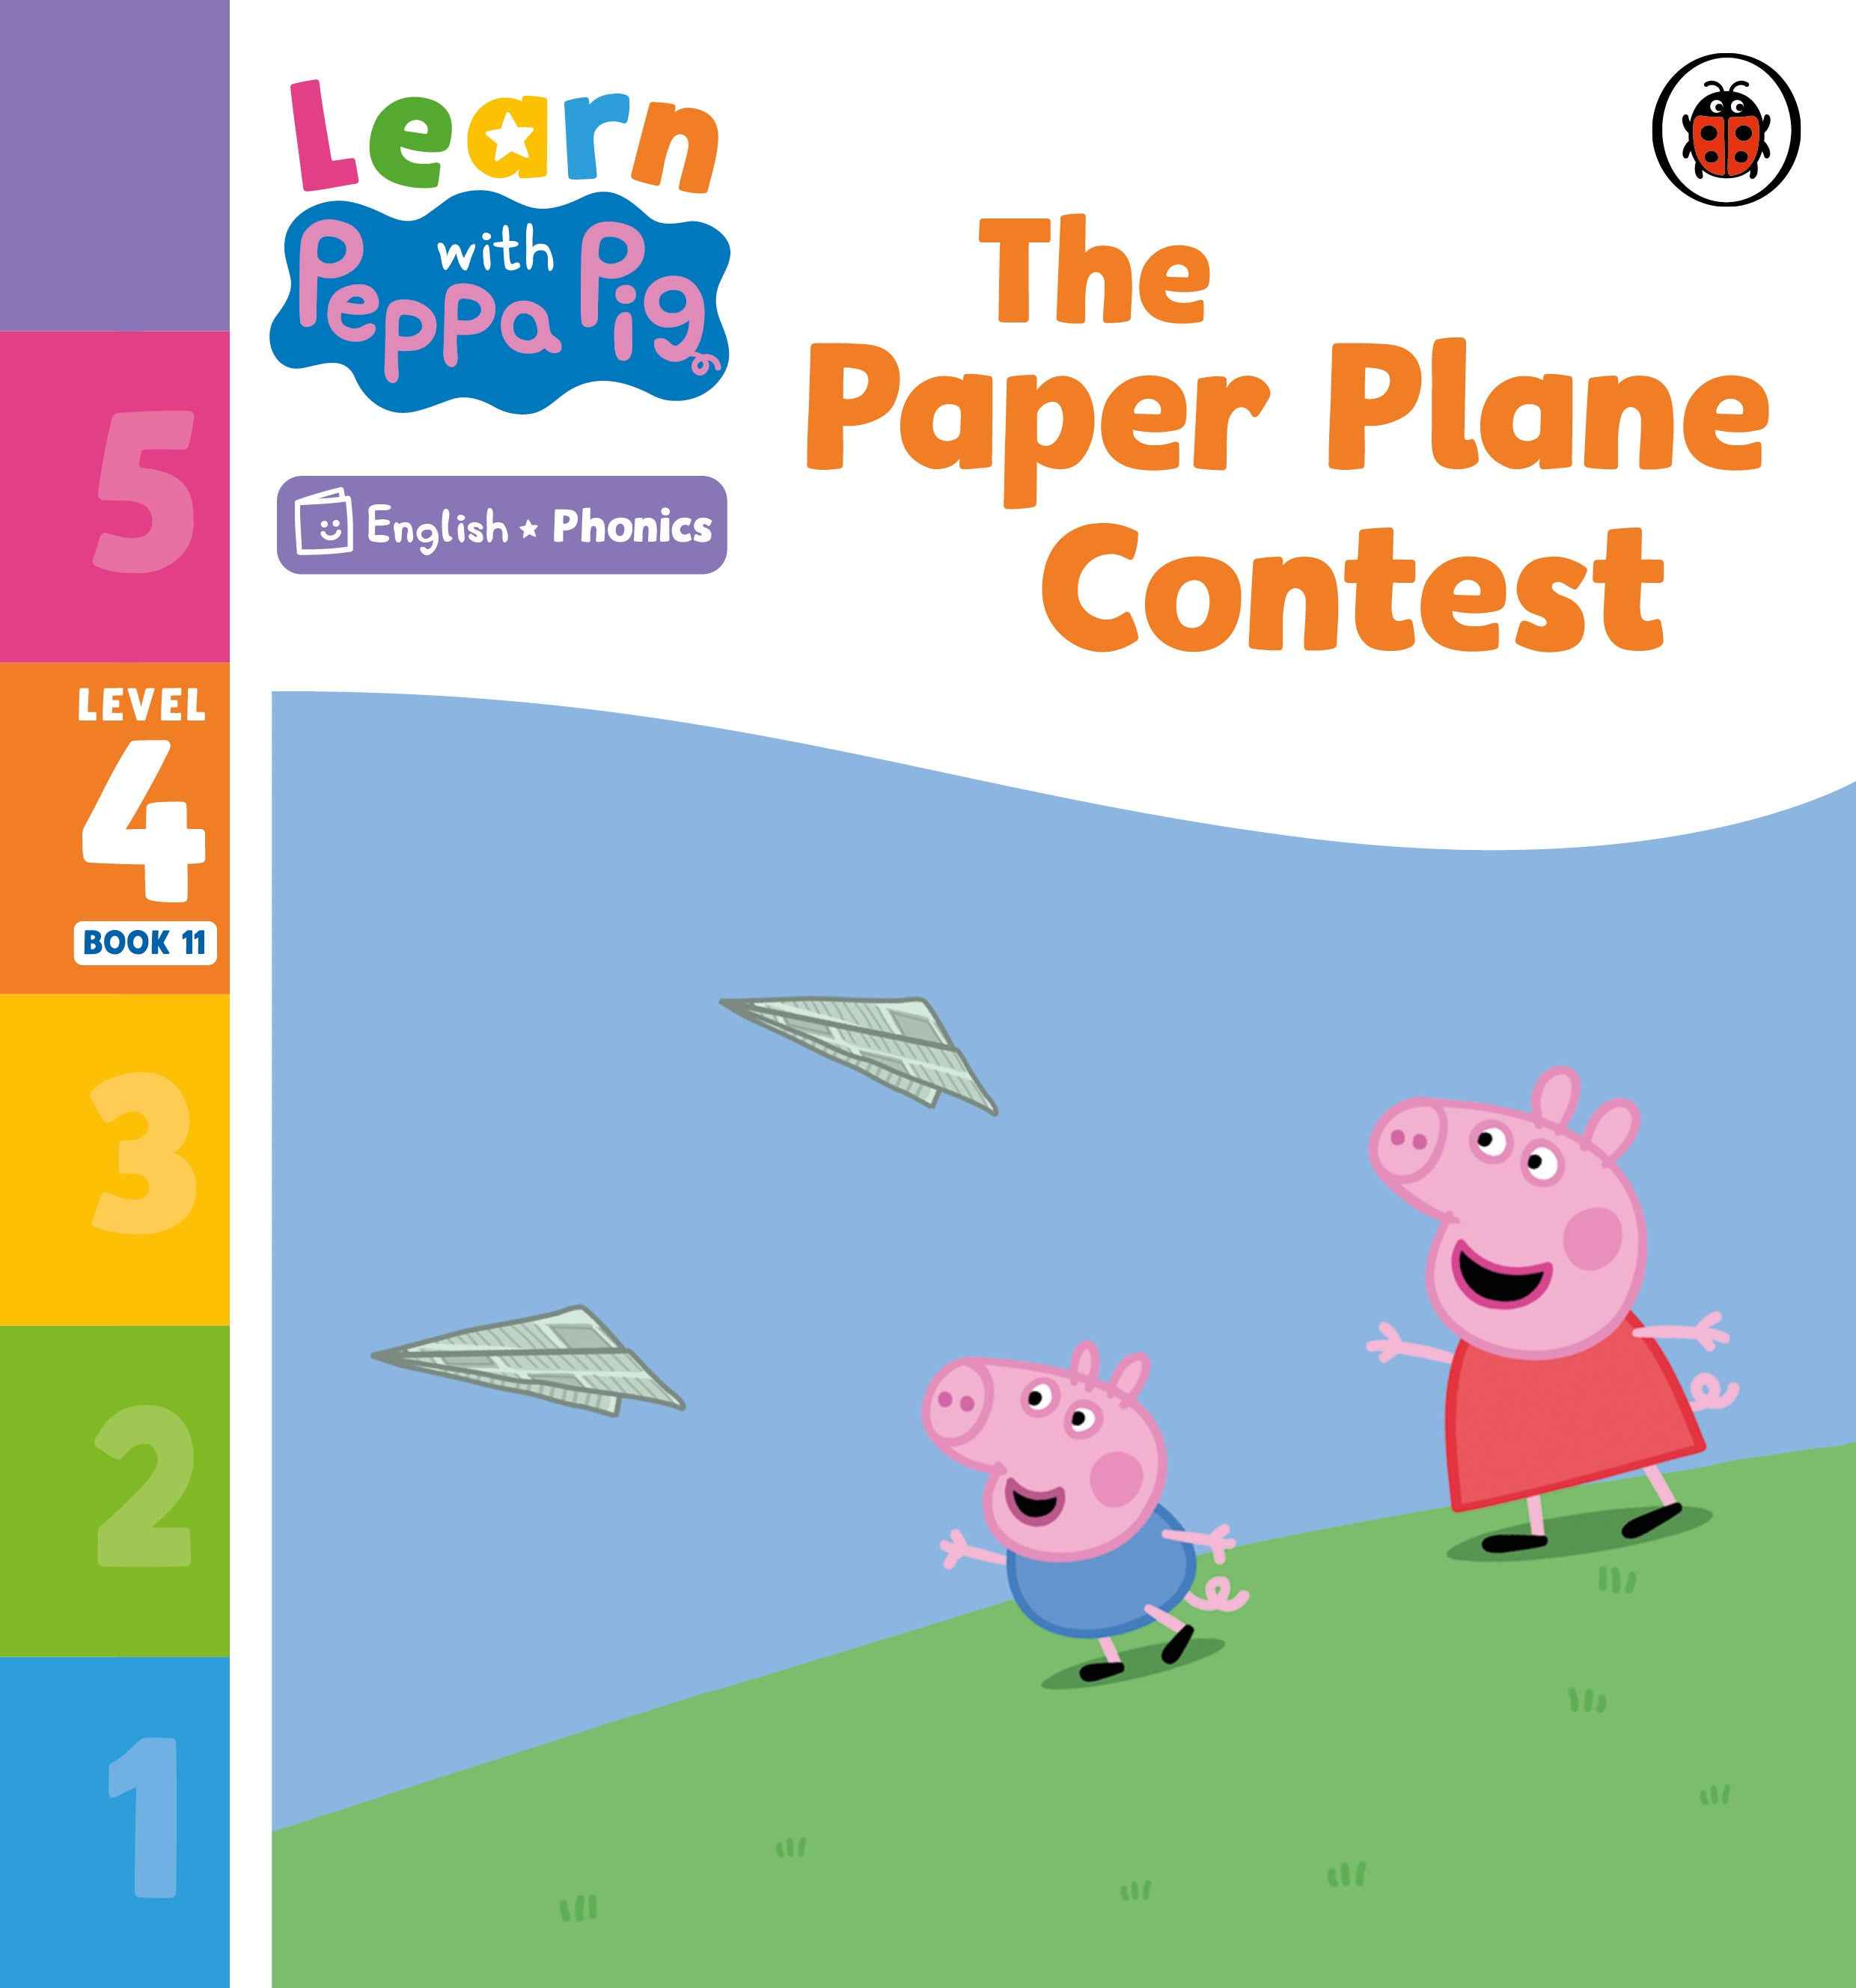 The Paper Plane Contest